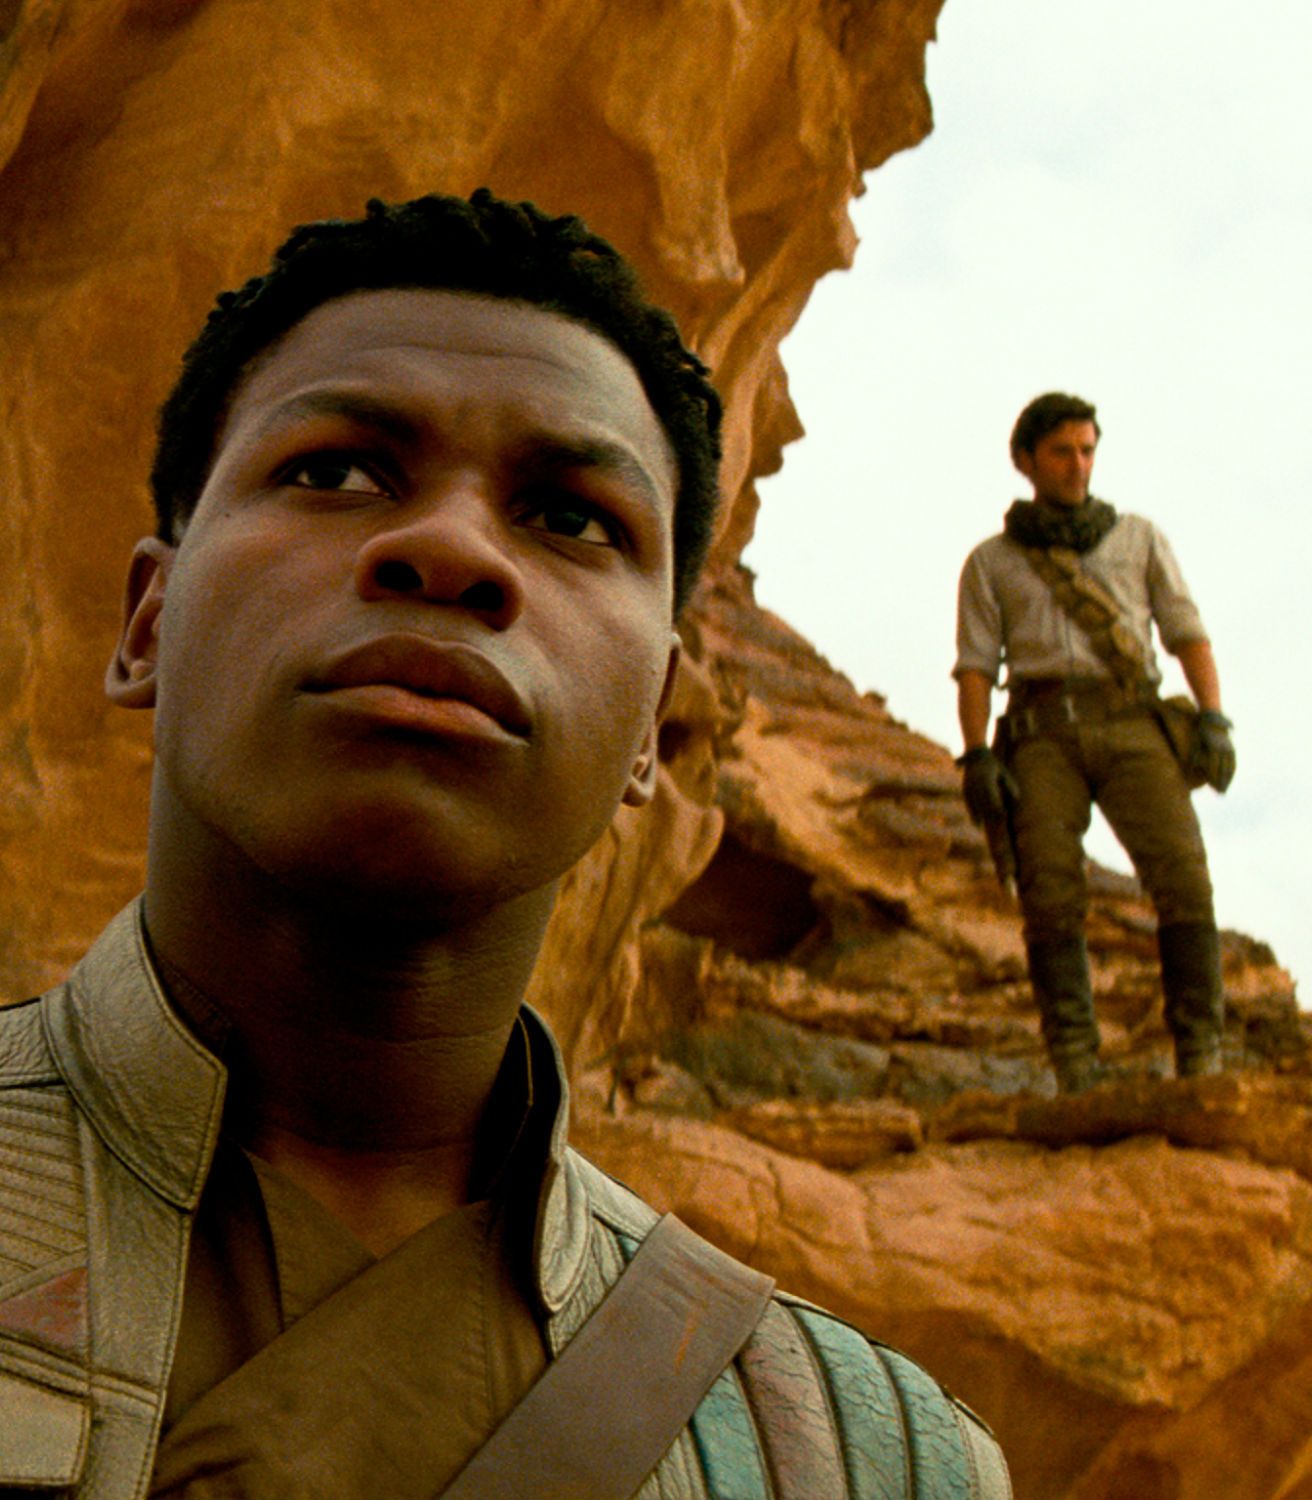 Star Wars The Rise of Skywalker Trailer - Finn and Poe Vertical